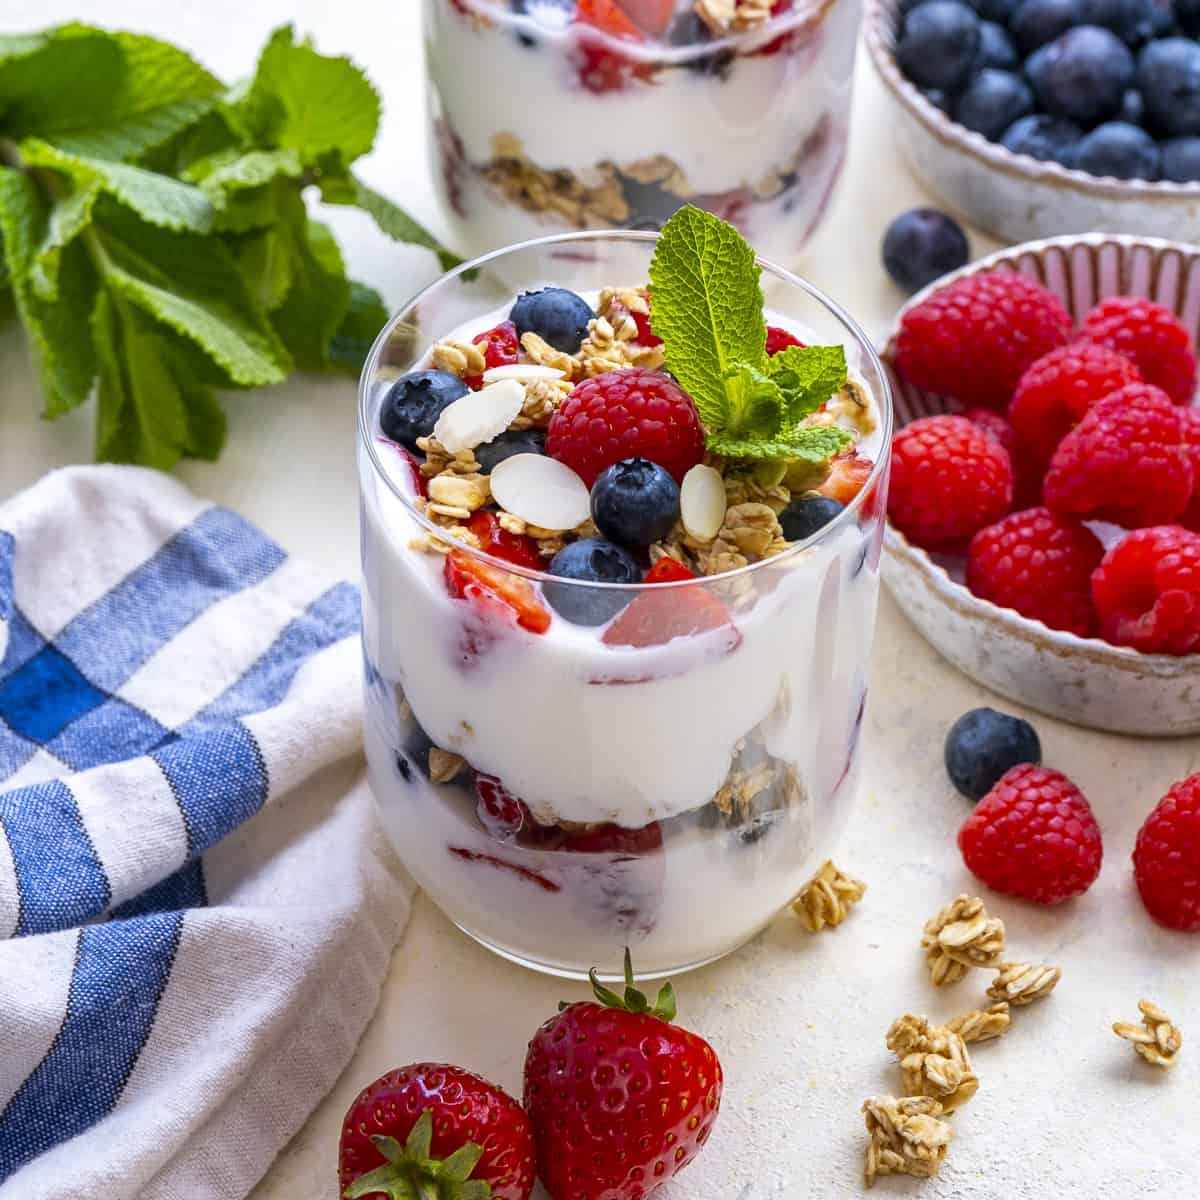 https://www.giverecipe.com/wp-content/uploads/2014/04/Yogurt-breakfast-parfait.jpg